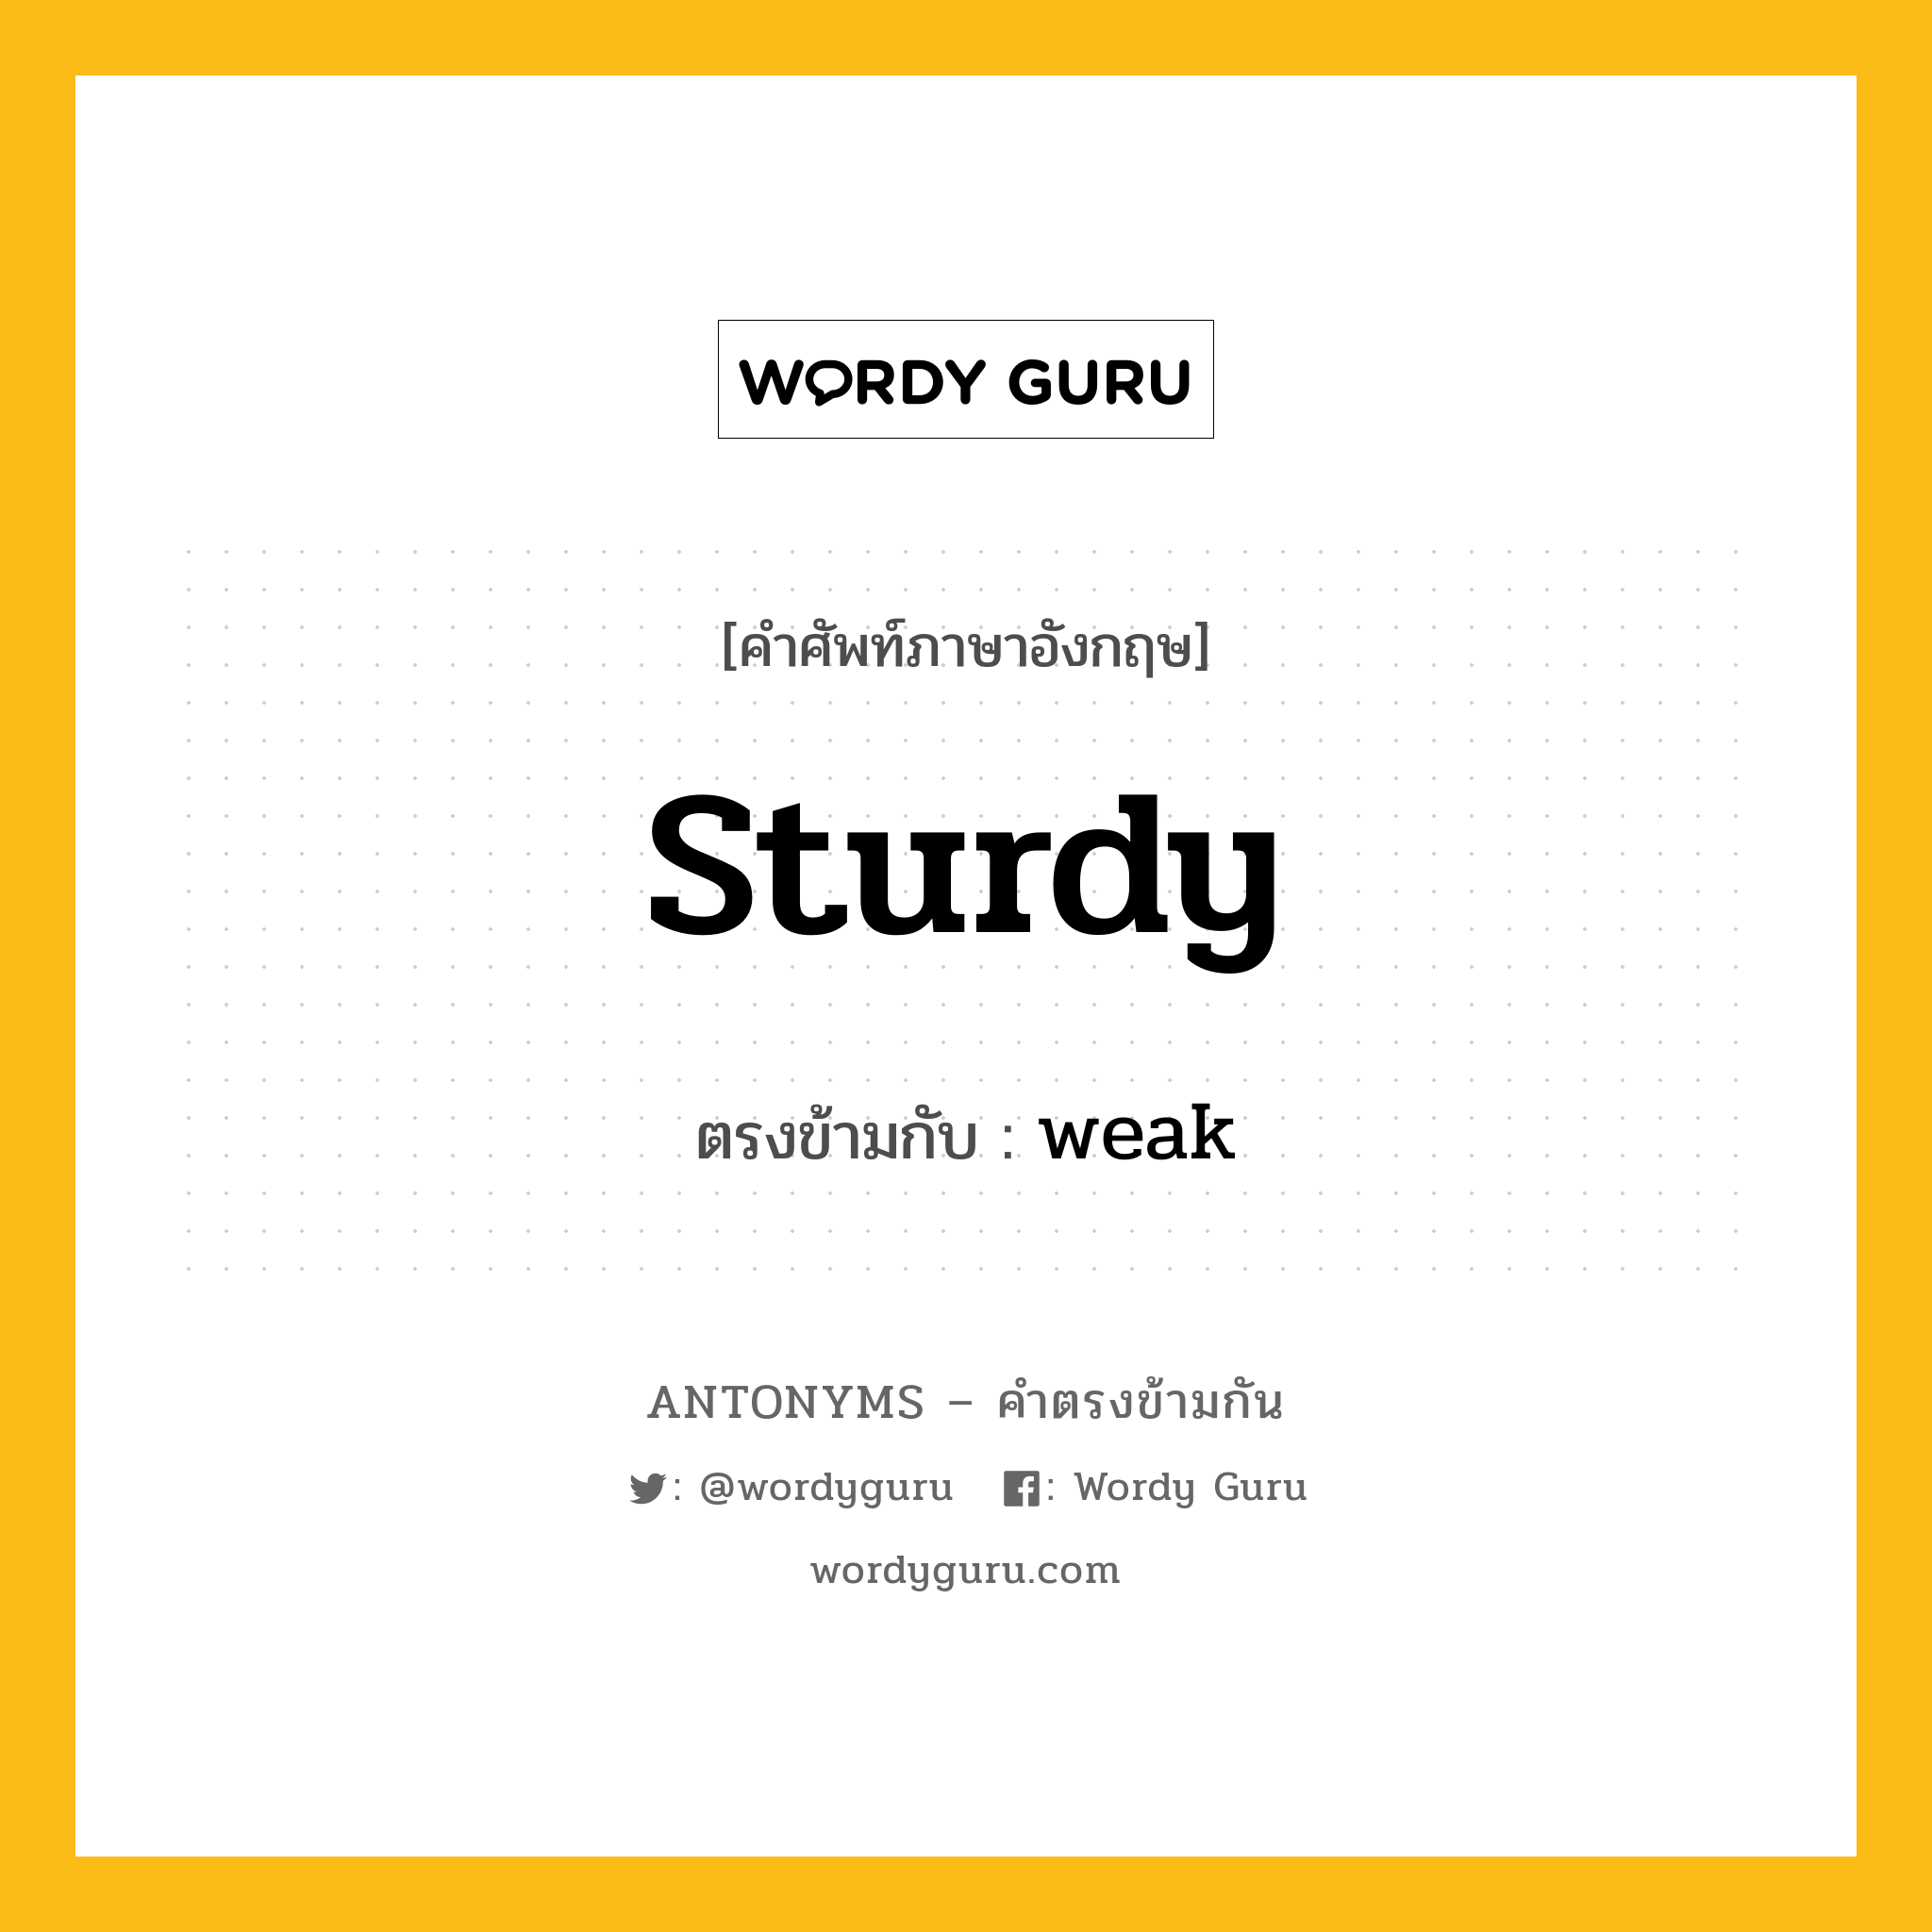 sturdy เป็นคำตรงข้ามกับคำไหนบ้าง?, คำศัพท์ภาษาอังกฤษ sturdy ตรงข้ามกับ weak หมวด weak